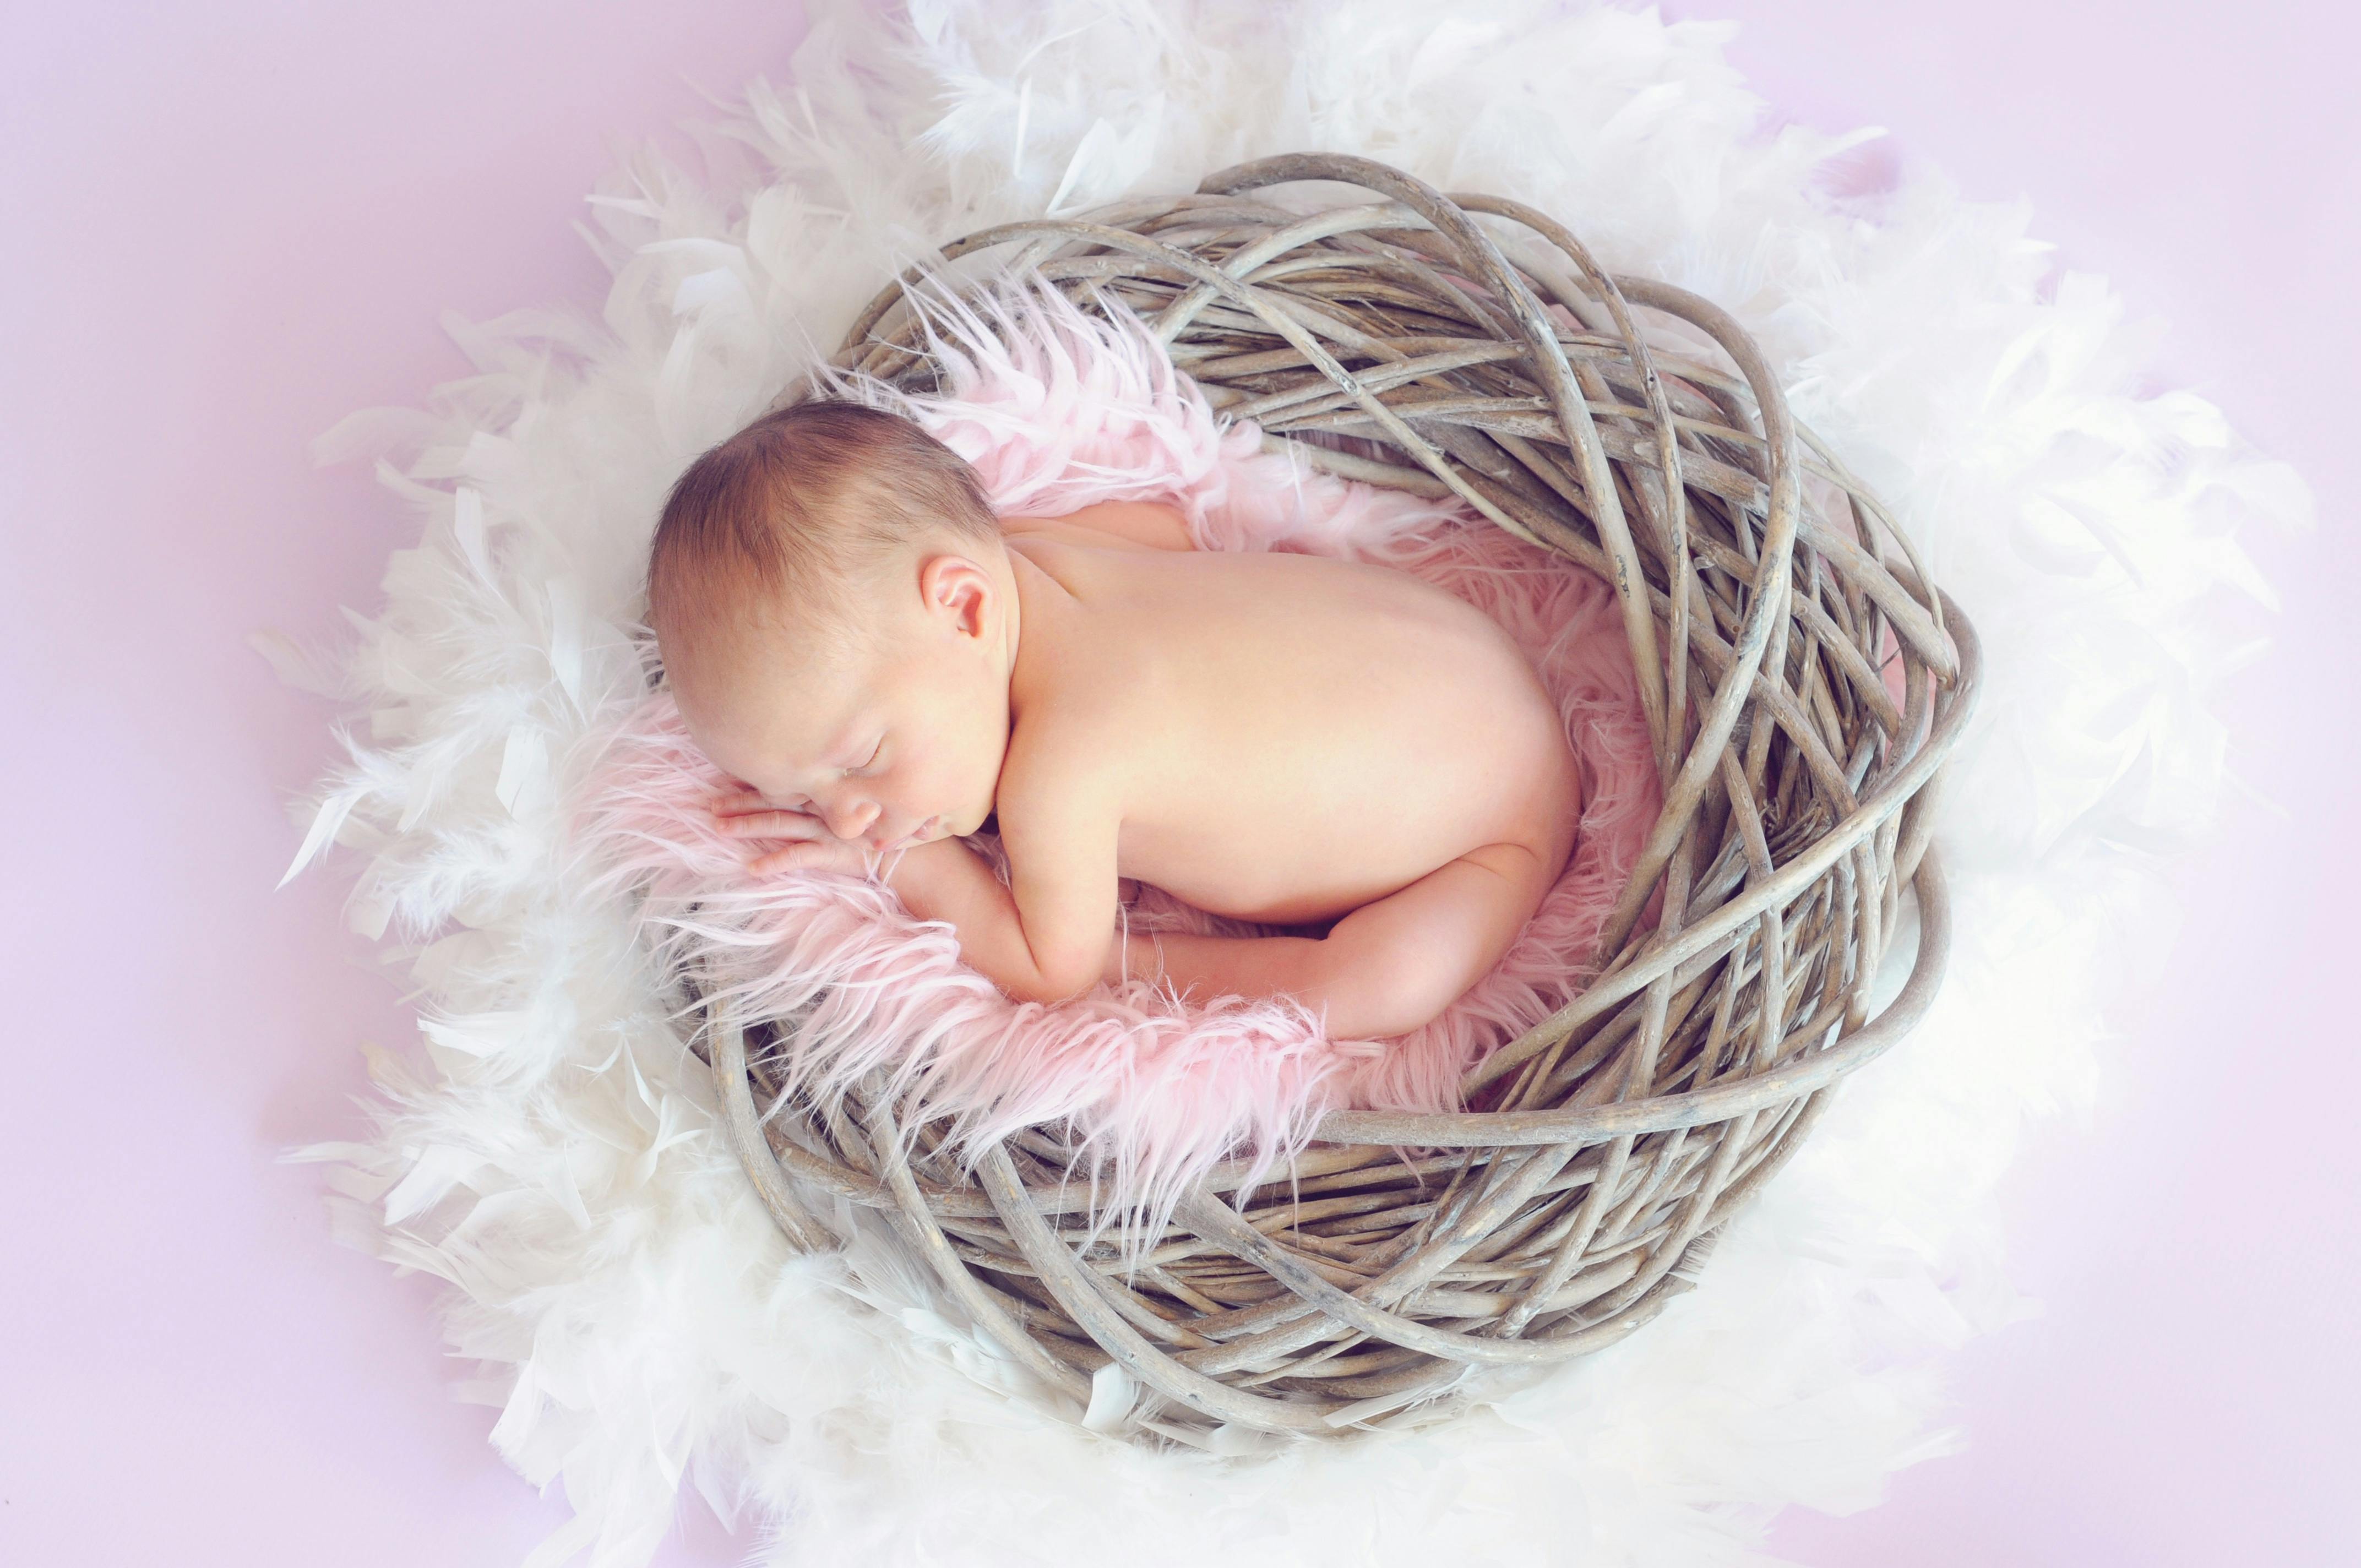 Can make a new born baby sleep?